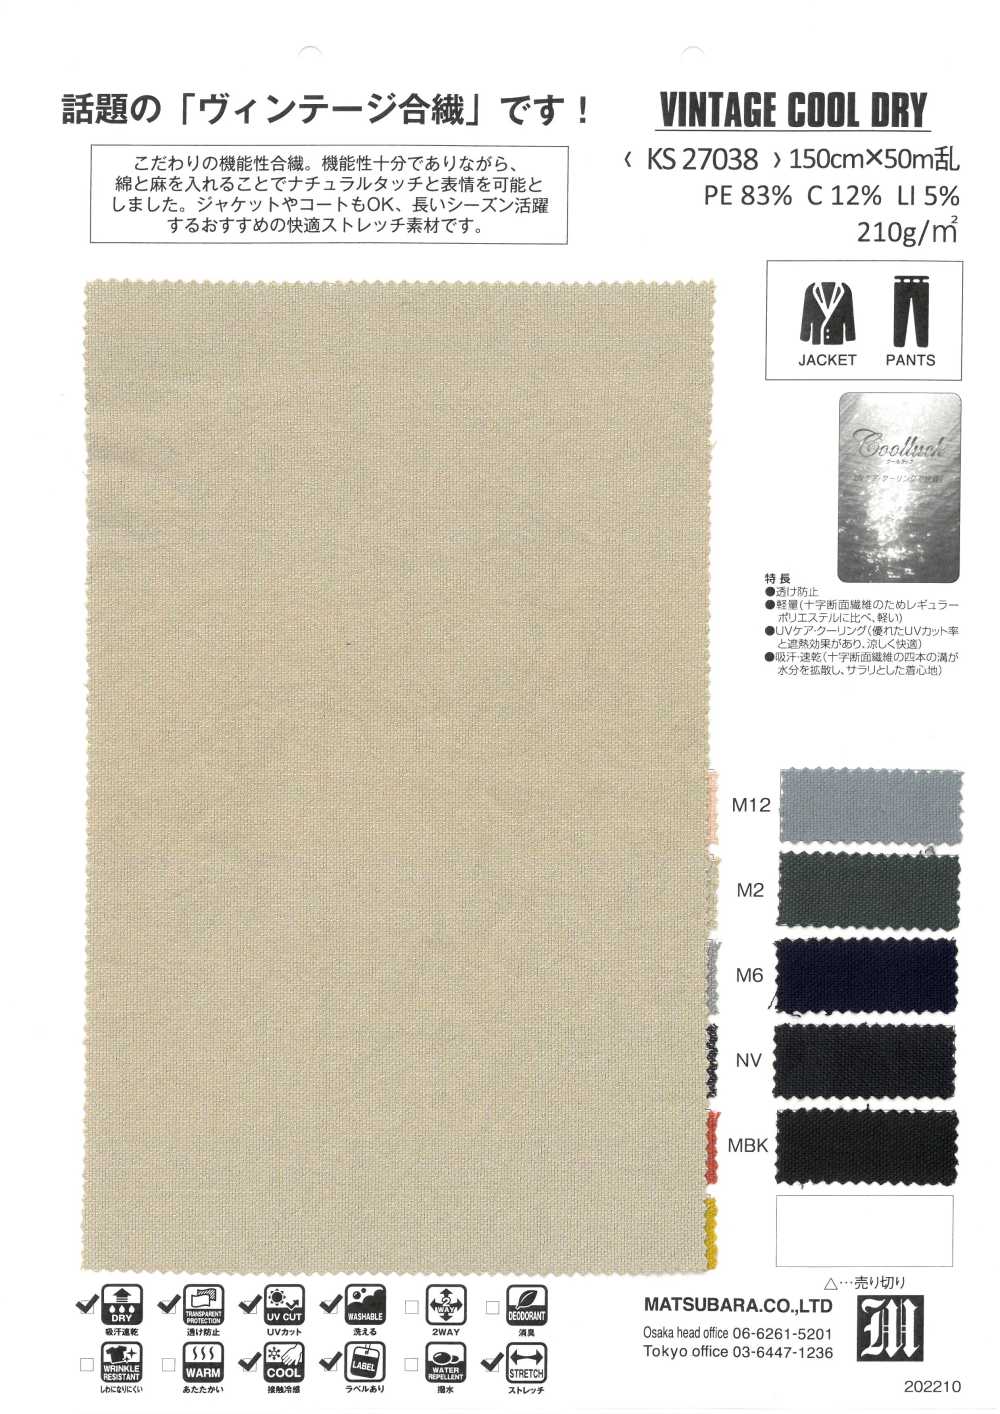 KS27038 VINTAGE COOL DRY[Textile / Fabric] Matsubara